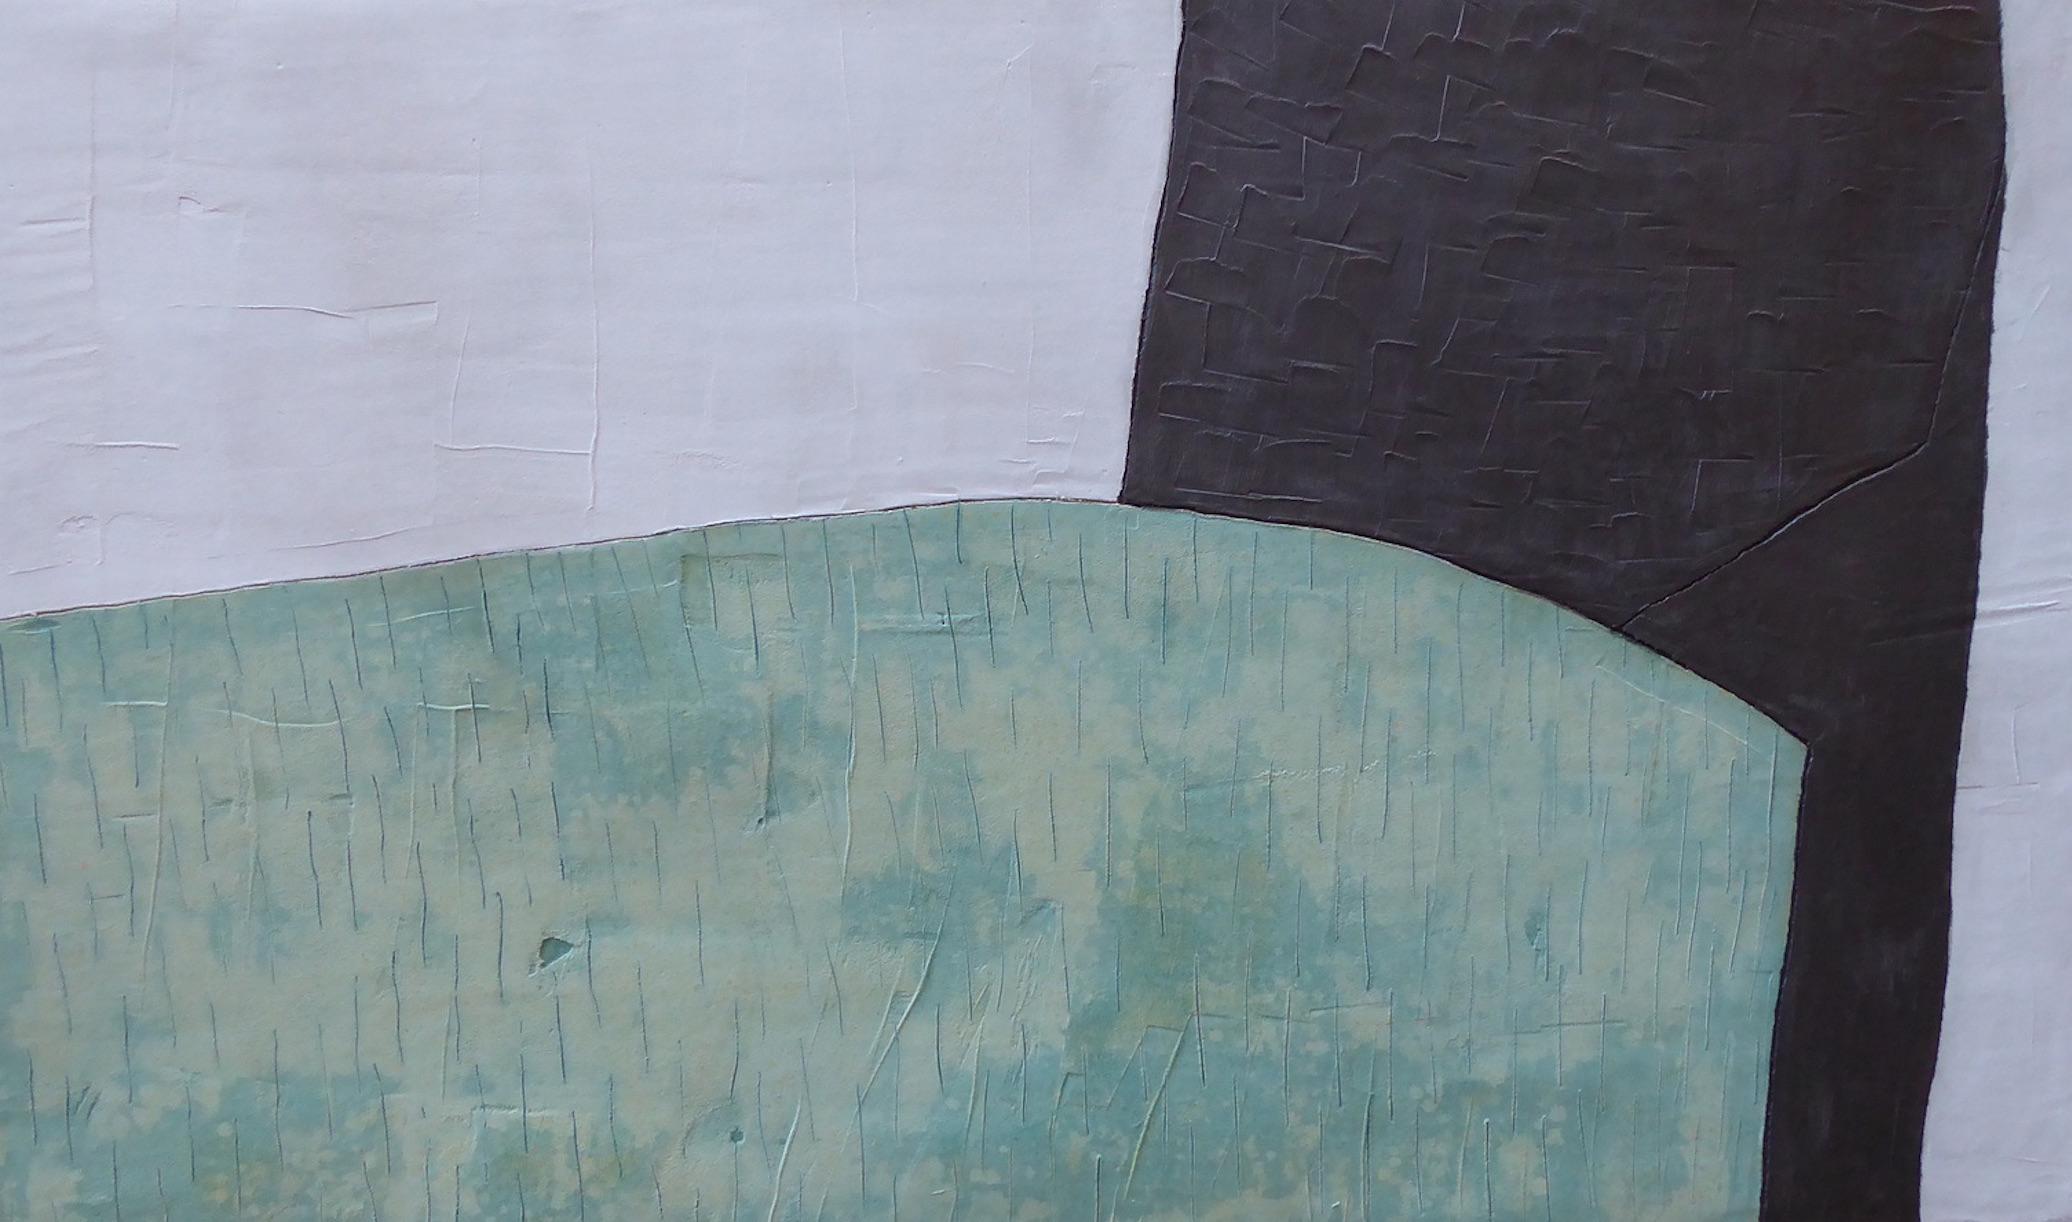 Núria Guinovart Abstract Painting - Temprança - 21st Century, Abstract Art, Cement on Wood, Earth Tones